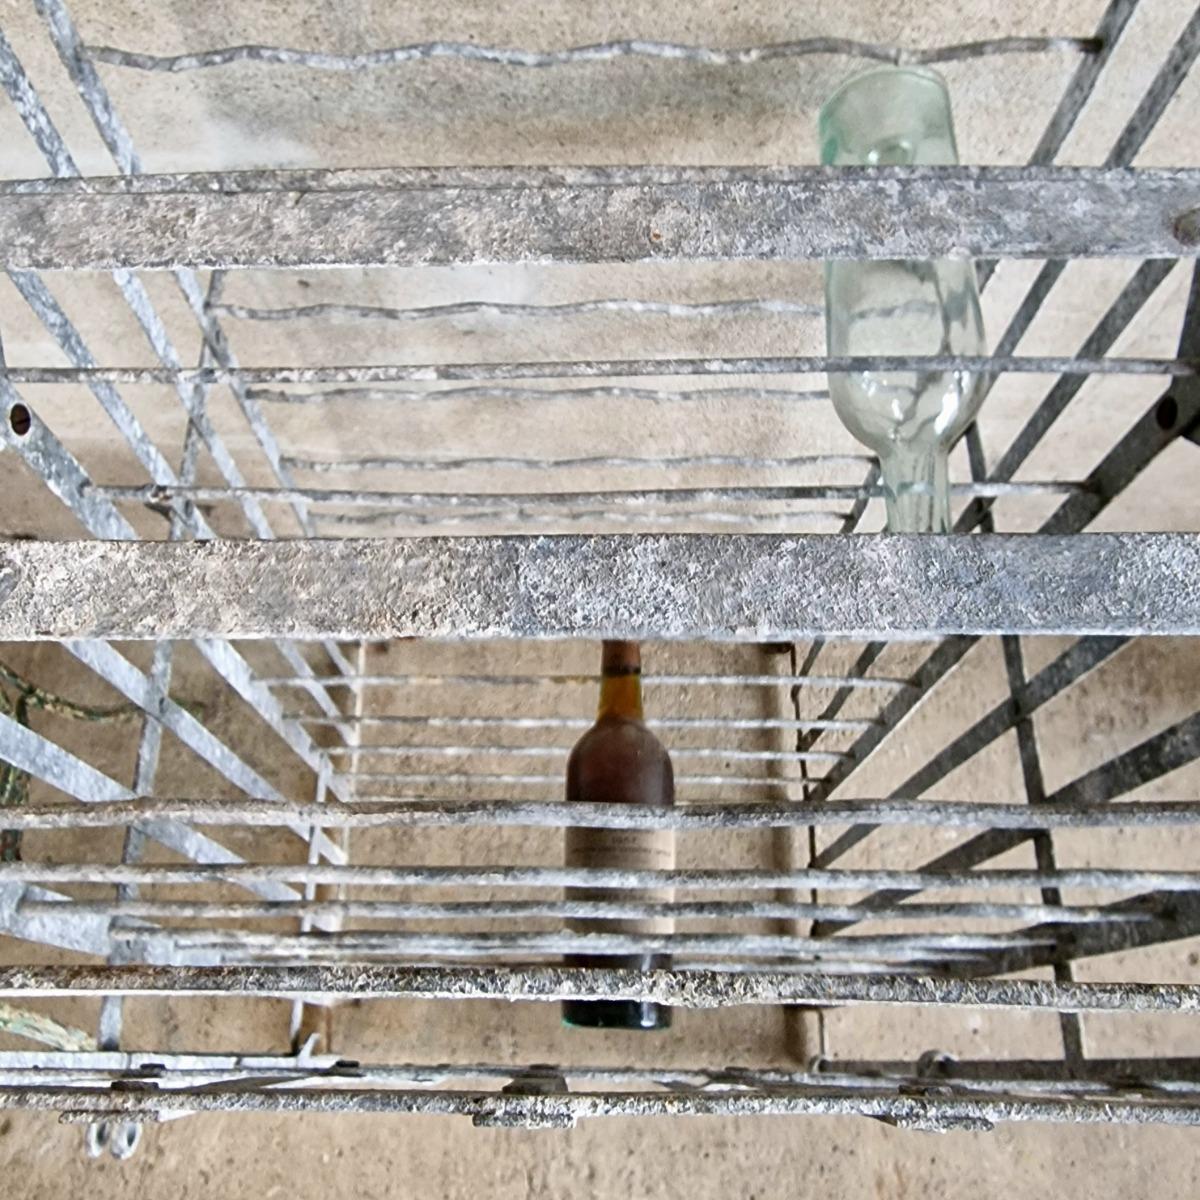 Galvanized wine bottle rack